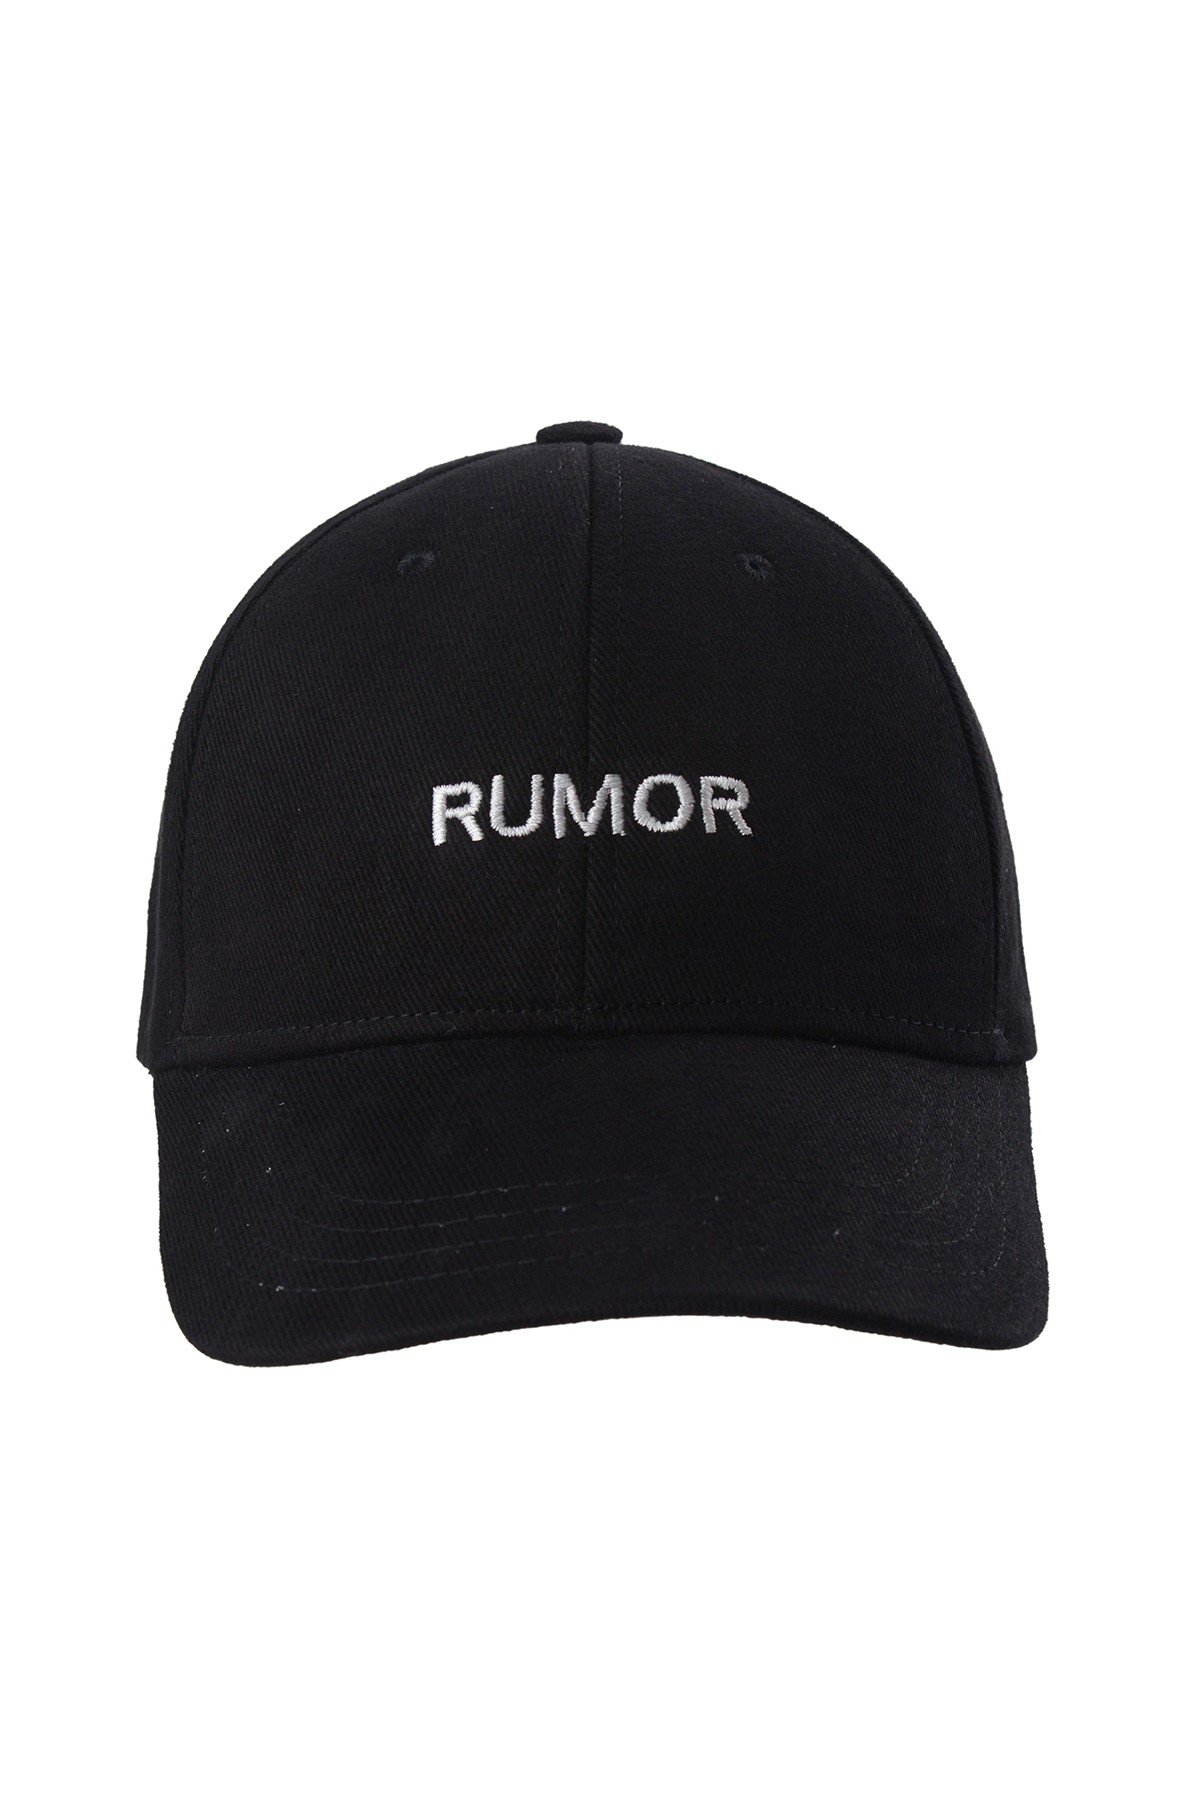 RUMOR BASIC CAP